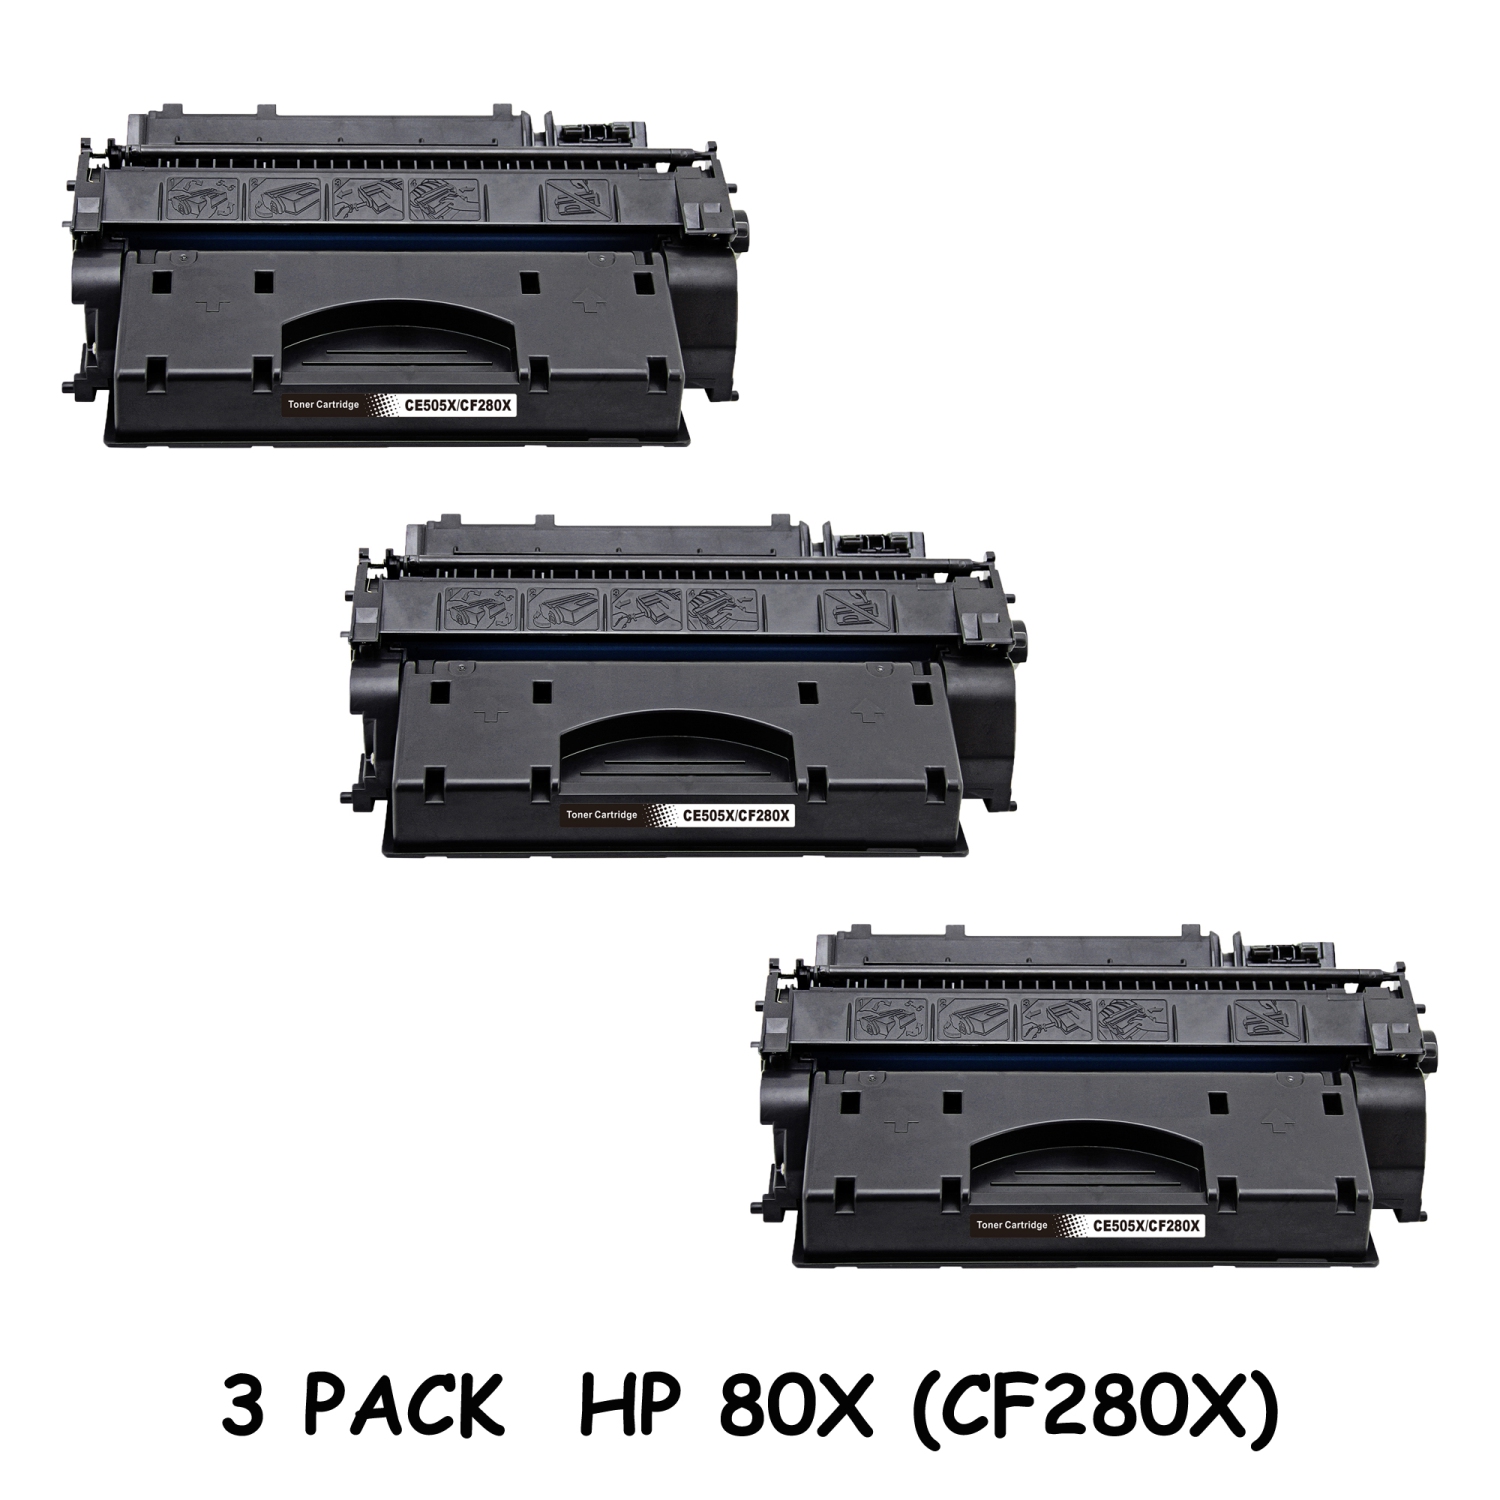 Bestoner™ 3 PK HP 80X (CF280X)/hp80x/80x/HP80X/80X/CF280X/cf280x/cf280/280/80A/80 HP LaserJet Pro M401 M425d